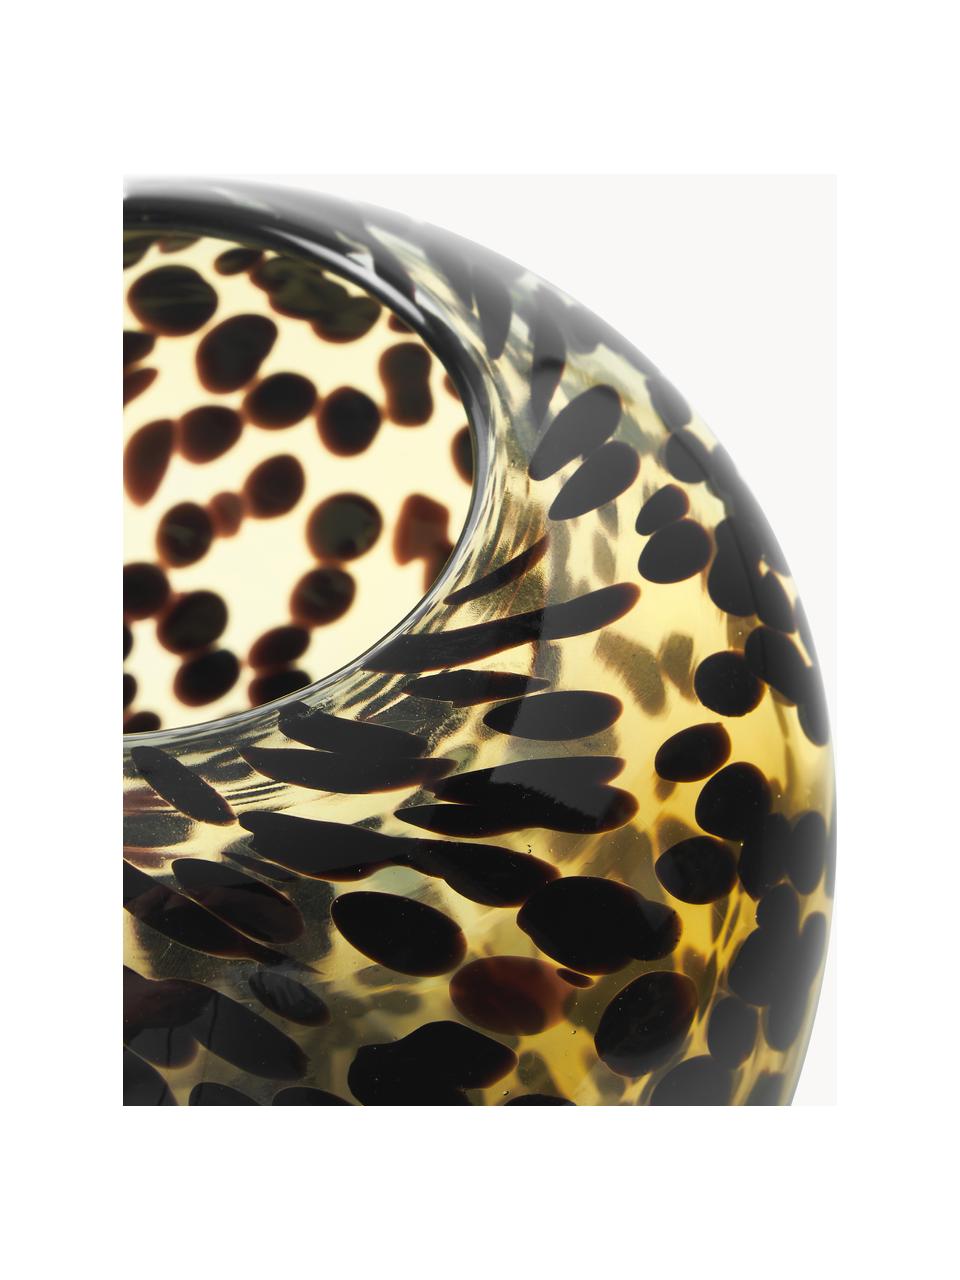 Mondgeblazen vaas Leopard met stippenpatroon, Glas, Lichtgeel, zwart, Ø 20 x H 18 cm